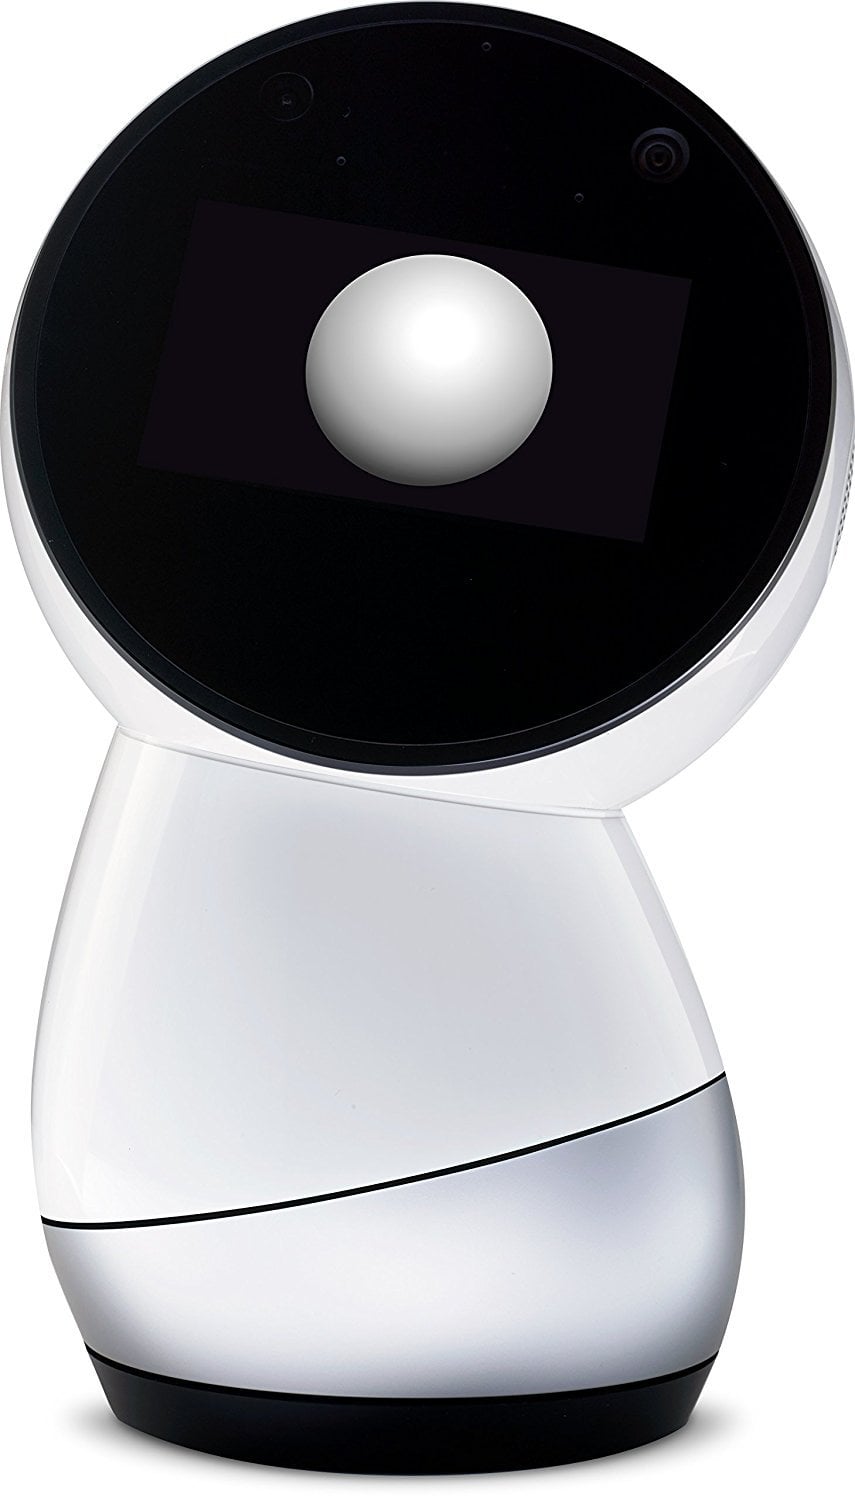 Jibo Social Robot For Home